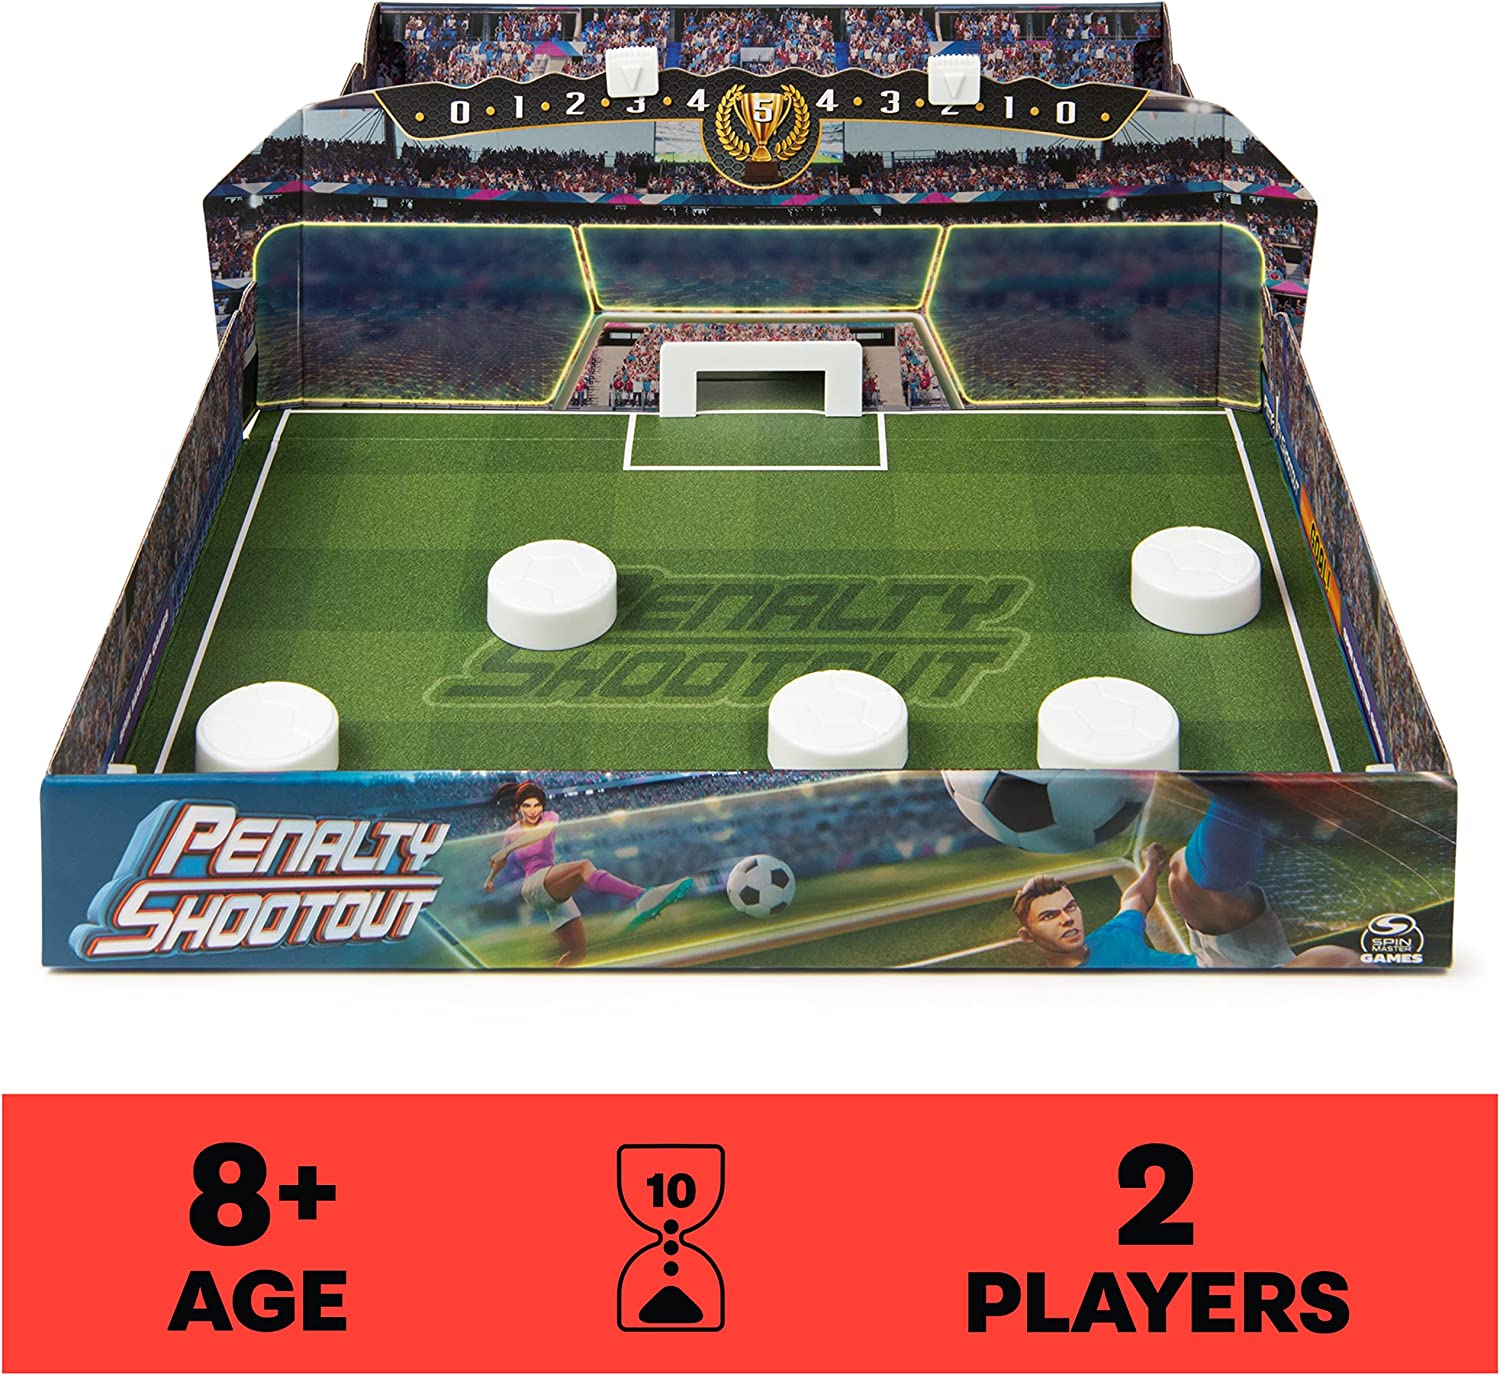 Playmobil Soccer Shoot Out (4726) – demo-kimmyshop